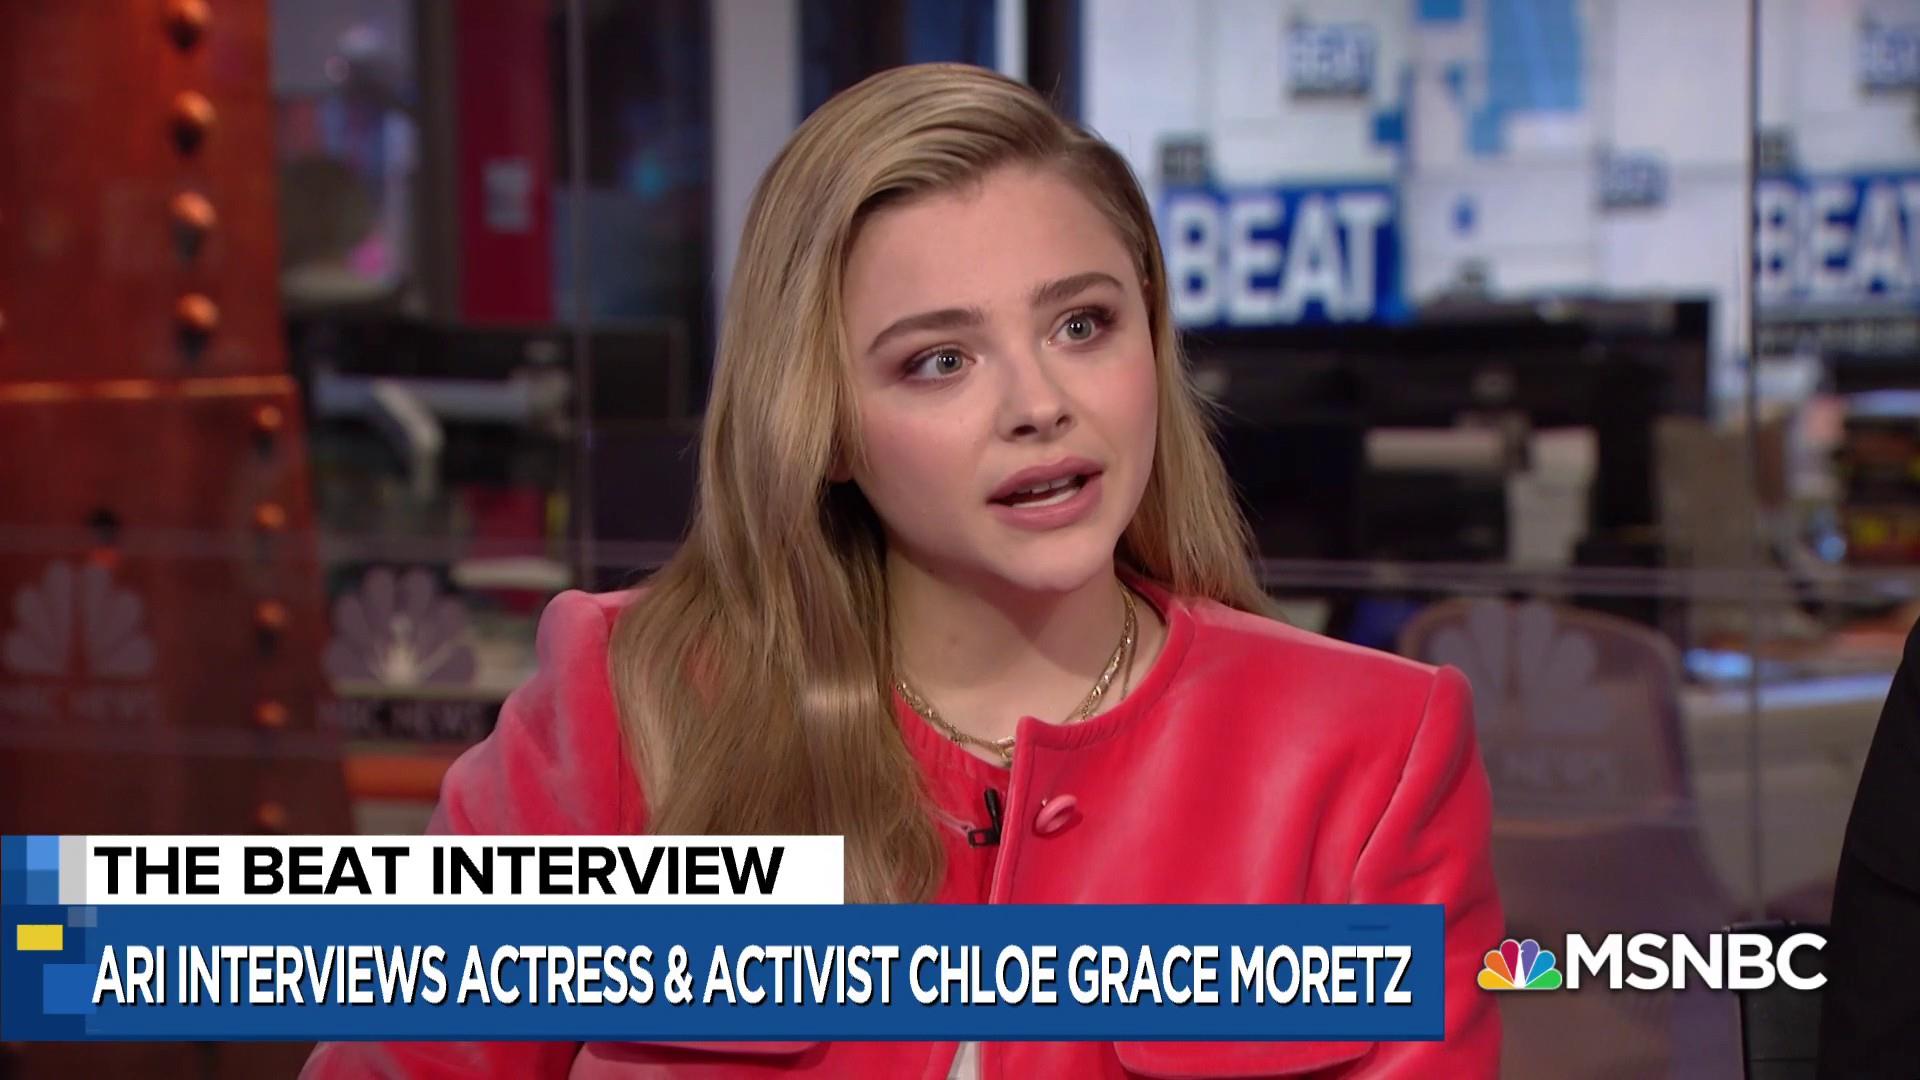 Actress Chloe Grace Moretz on new film: It's a form of activism